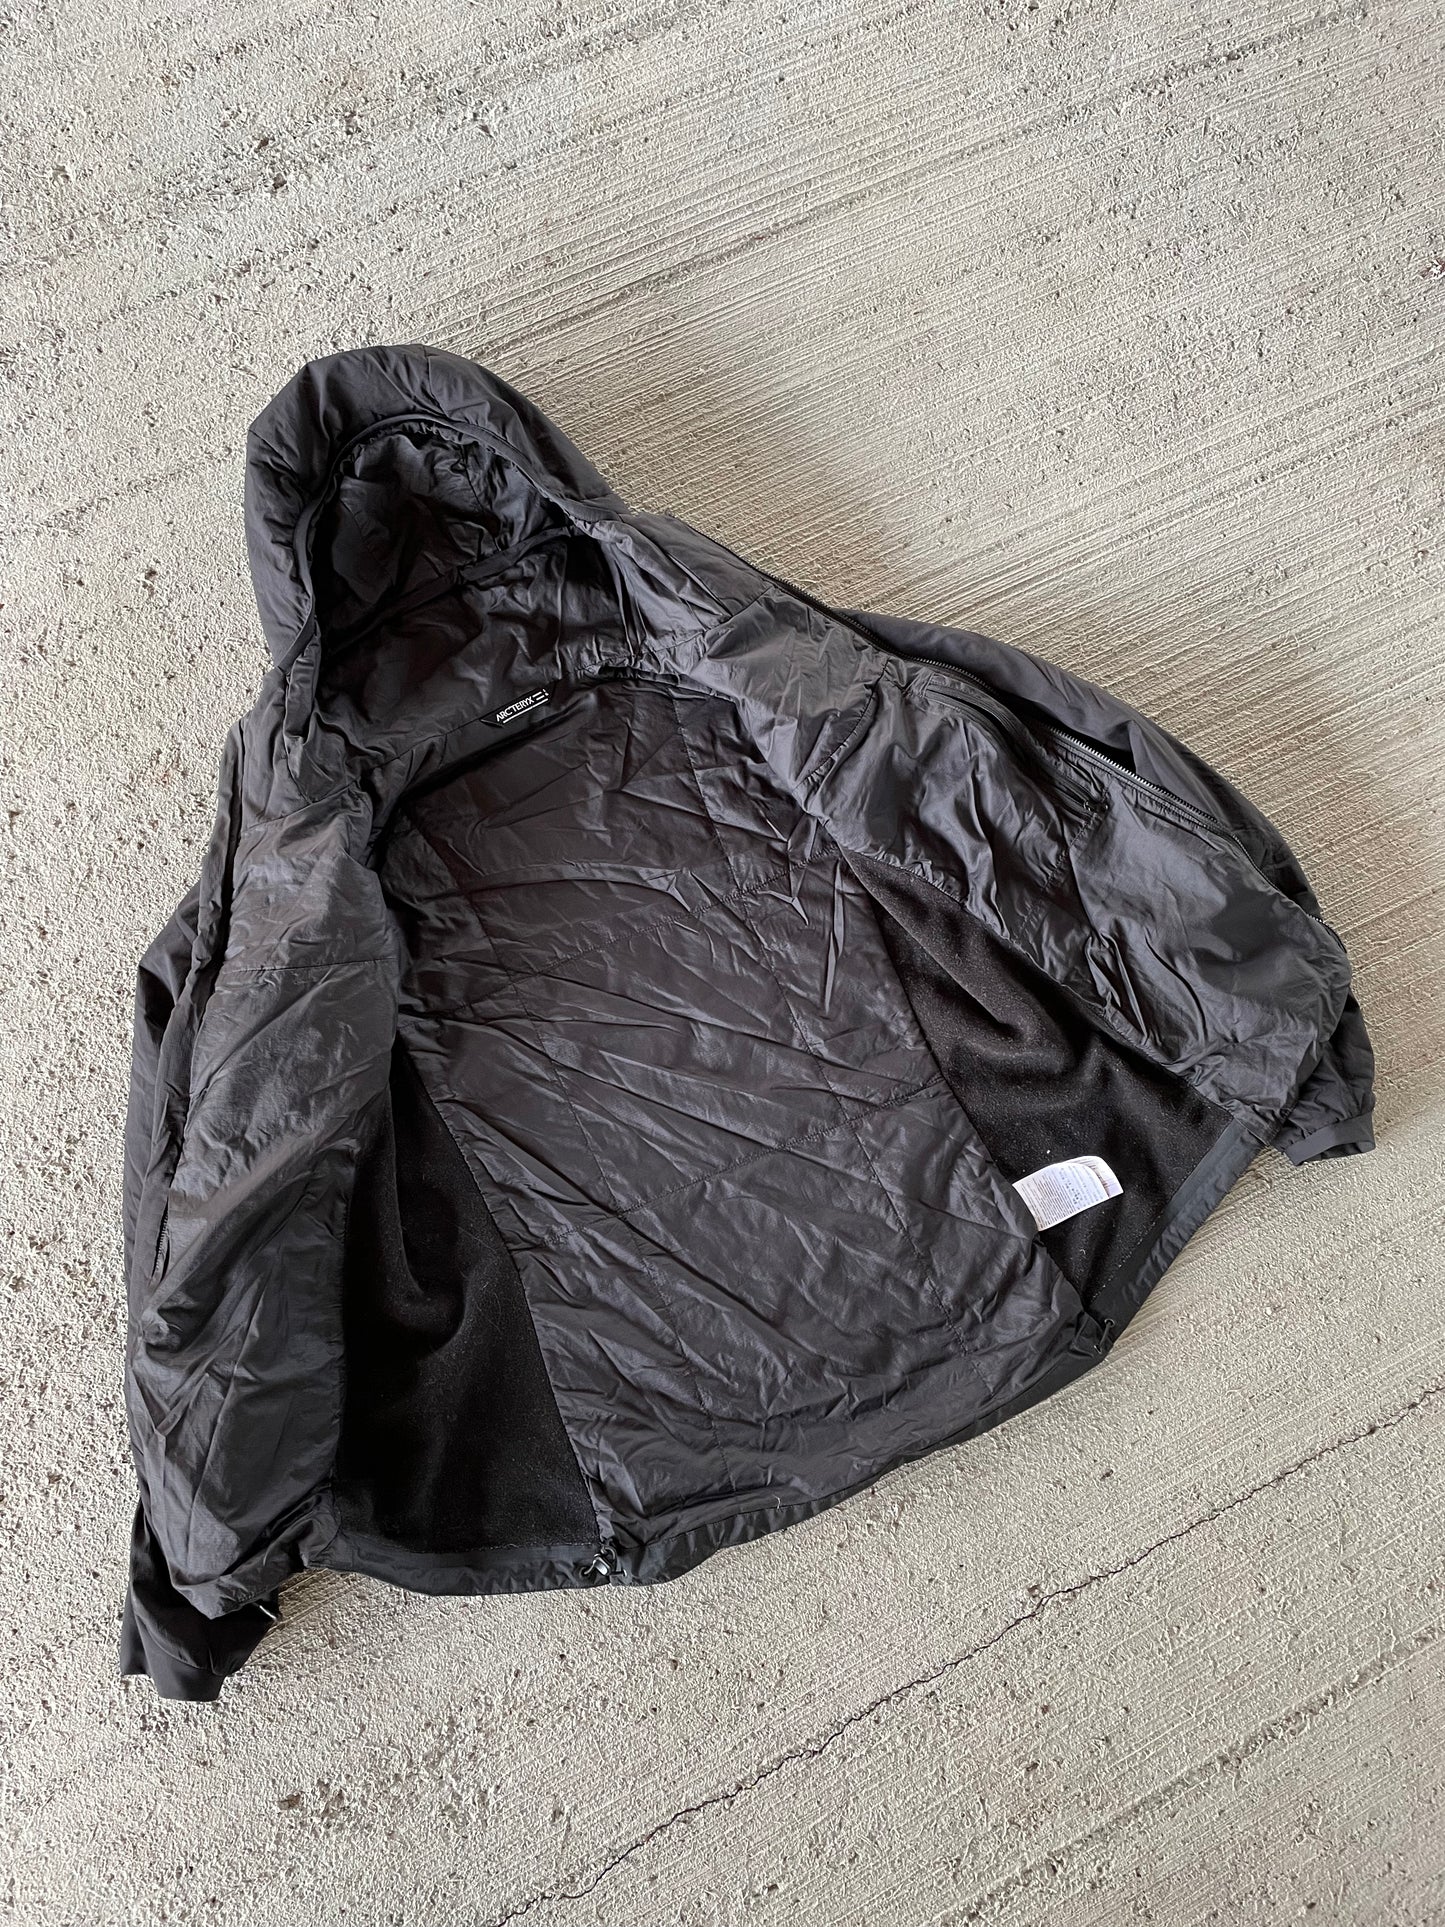 2017 Arc’teryx Atom LT Hooded Jacket